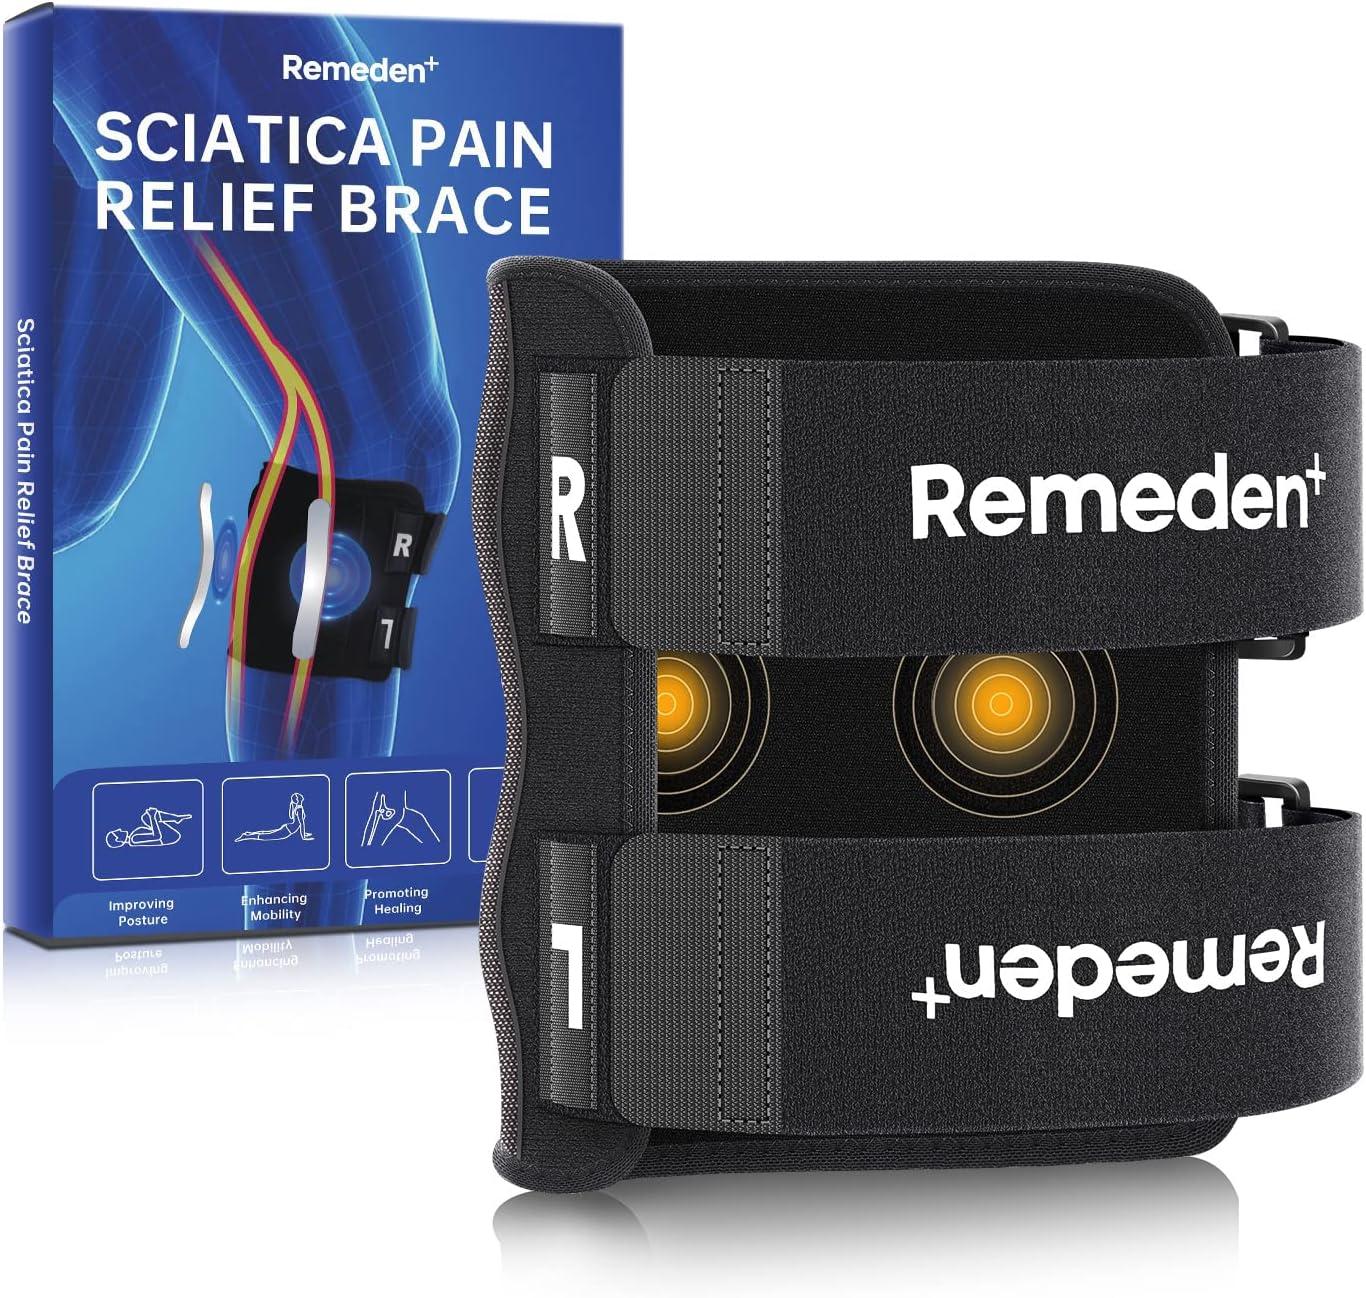 Healrecux Sciatica Pain Relief Brace Devices, Upgraded Brace for Sciatic  Nerve Pain with Dual Pressure Pad Targeted Compression, Sciatic Nerve Brace